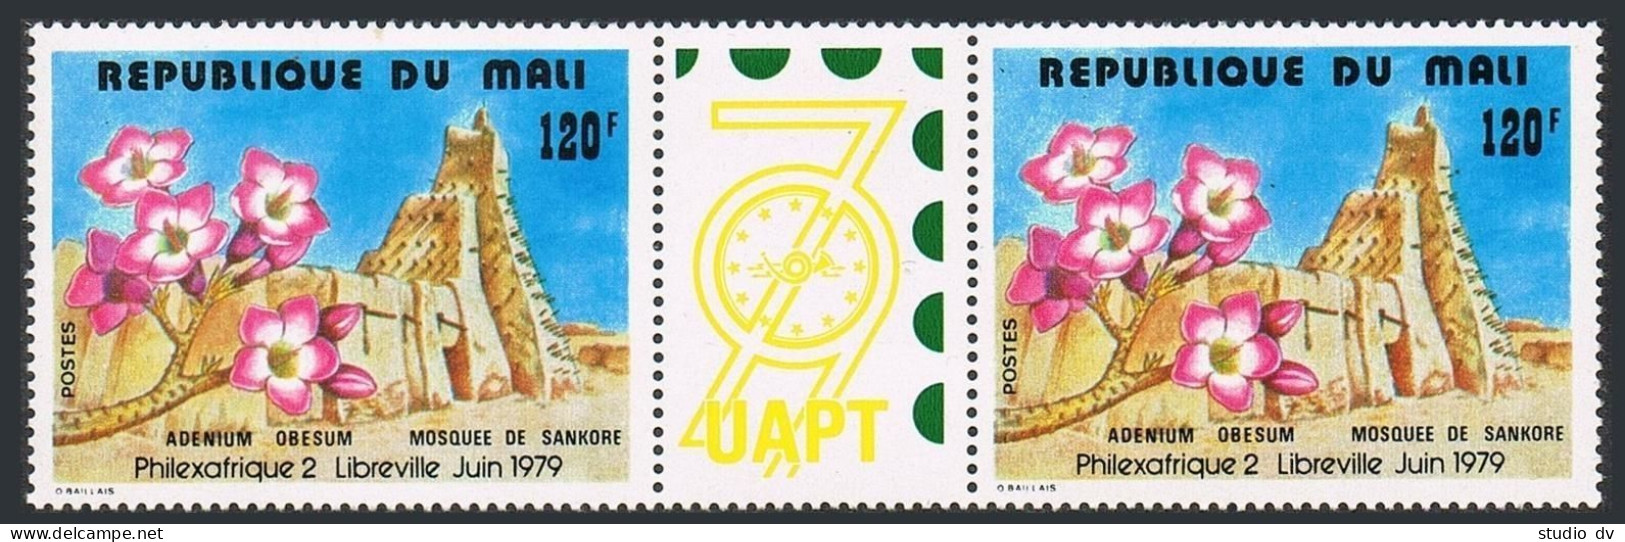 Mali 336-337 Pair-label, MNH. Michel 641-zf PHILEXAFRIQUE-1979. Flowers, Mosque. - Mali (1959-...)